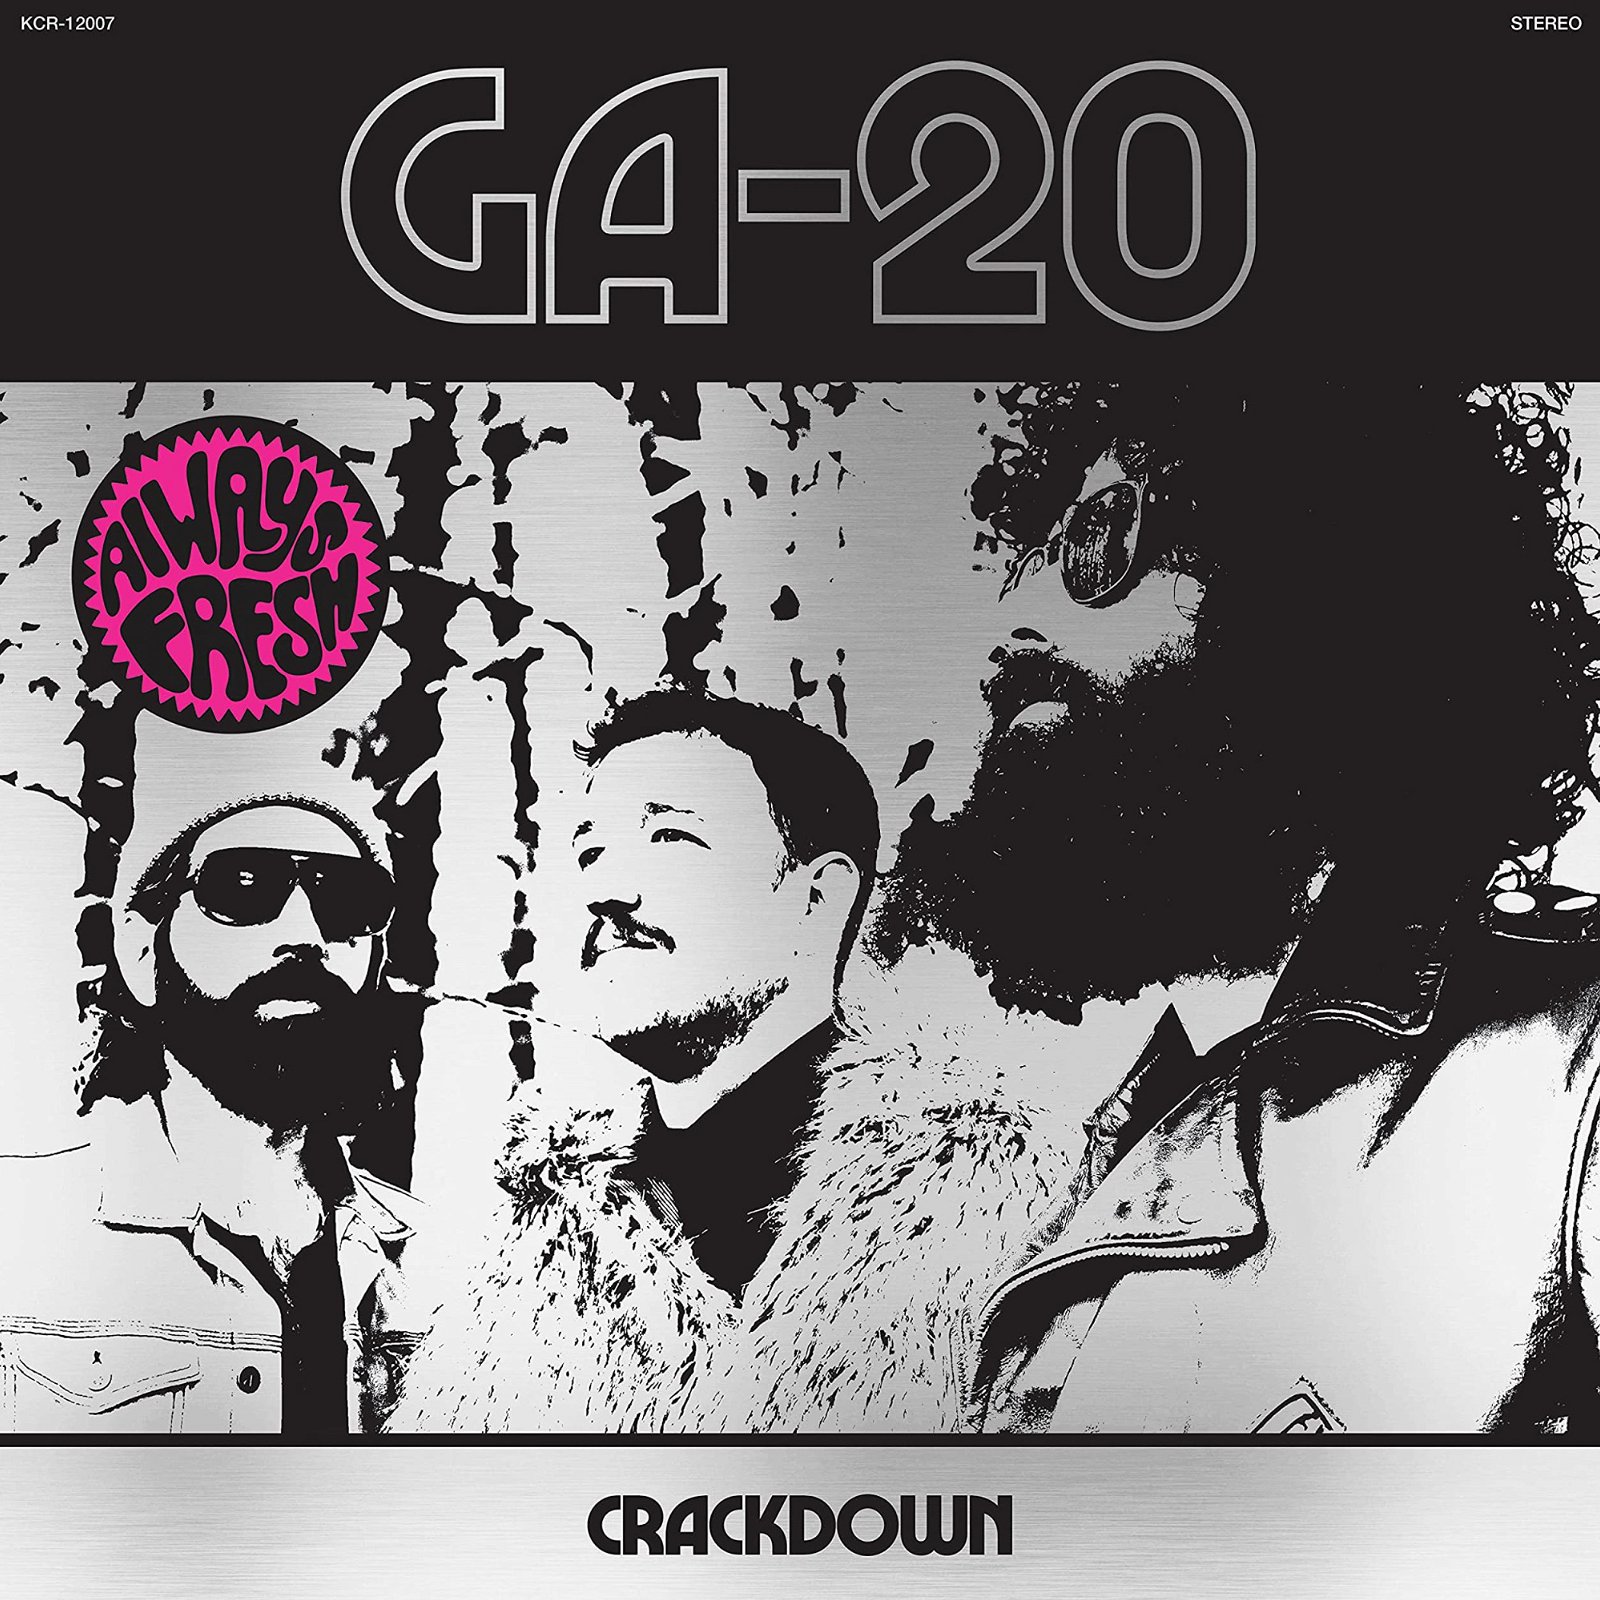 GA-20 - CRACKDOWN, Vinyl